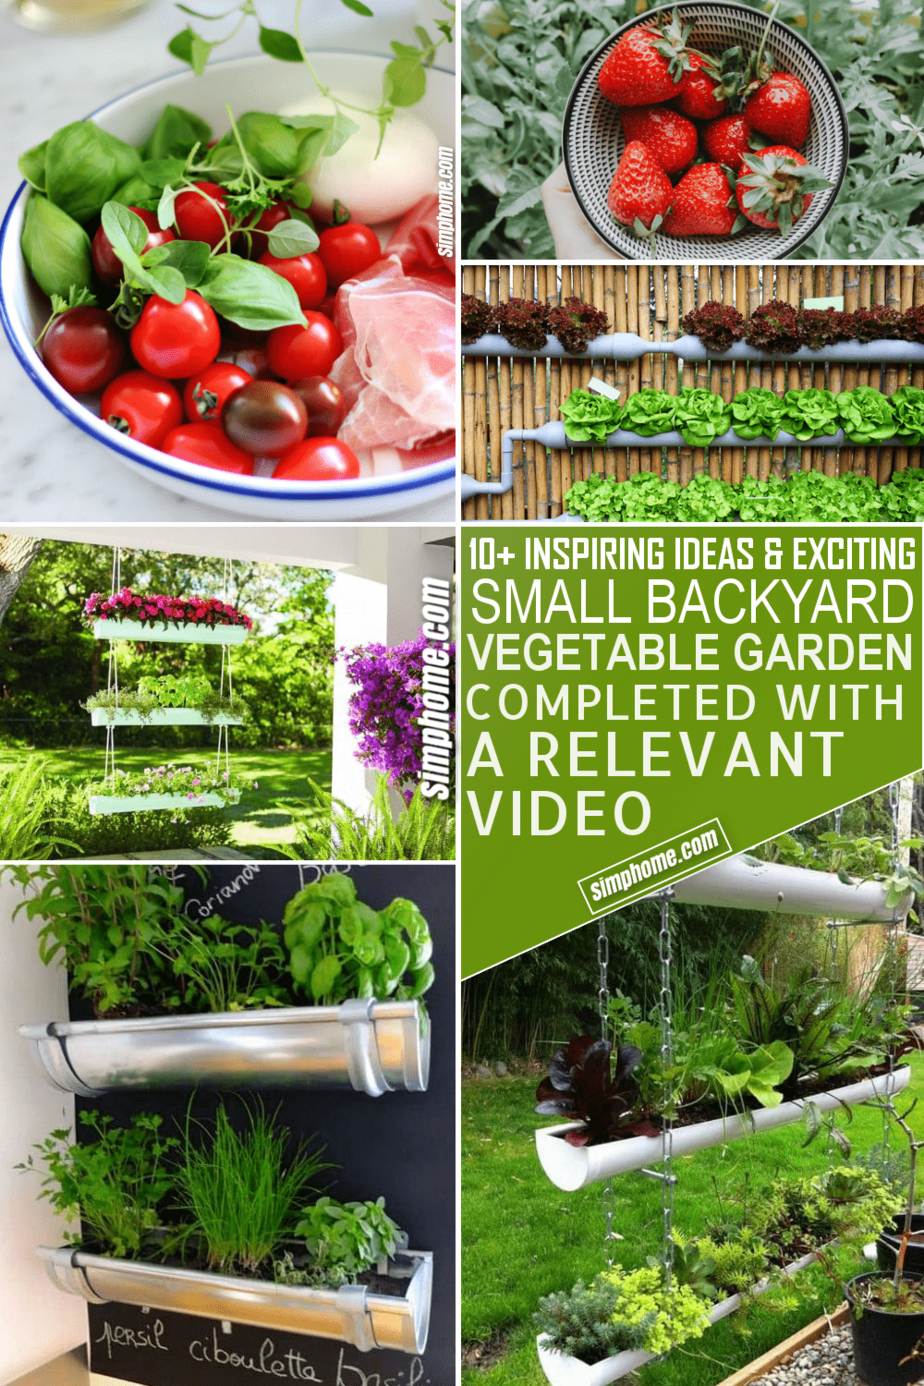 10 Small Backyard Vegetable Garden Ideas via Simphome.com Pinterest Image Feature